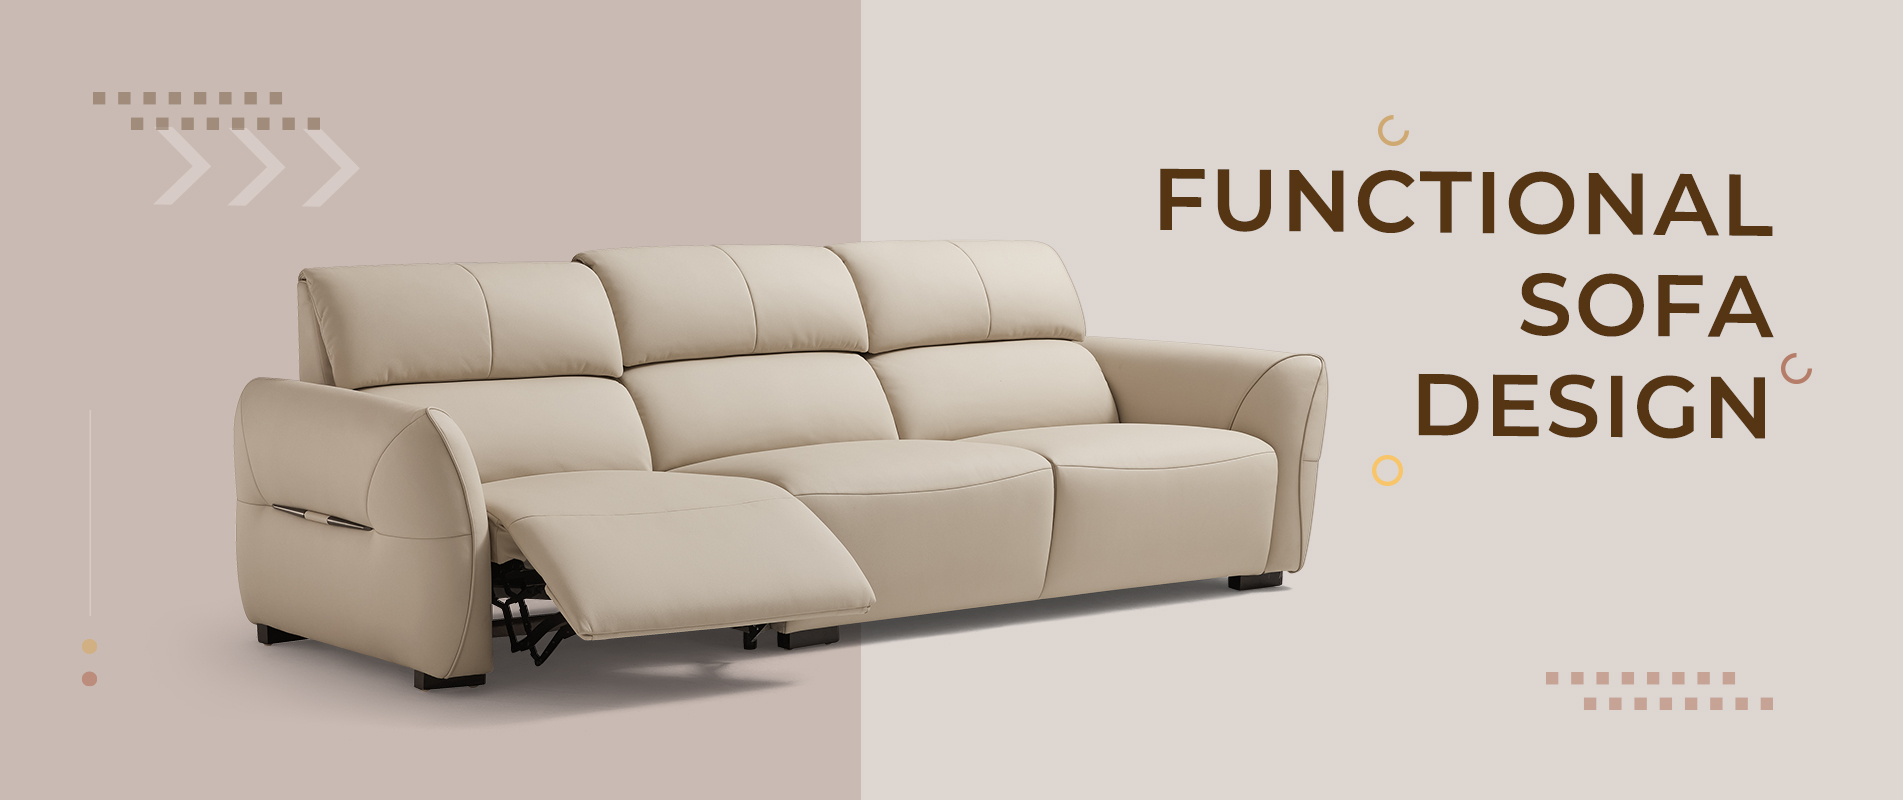 Functional sofa design